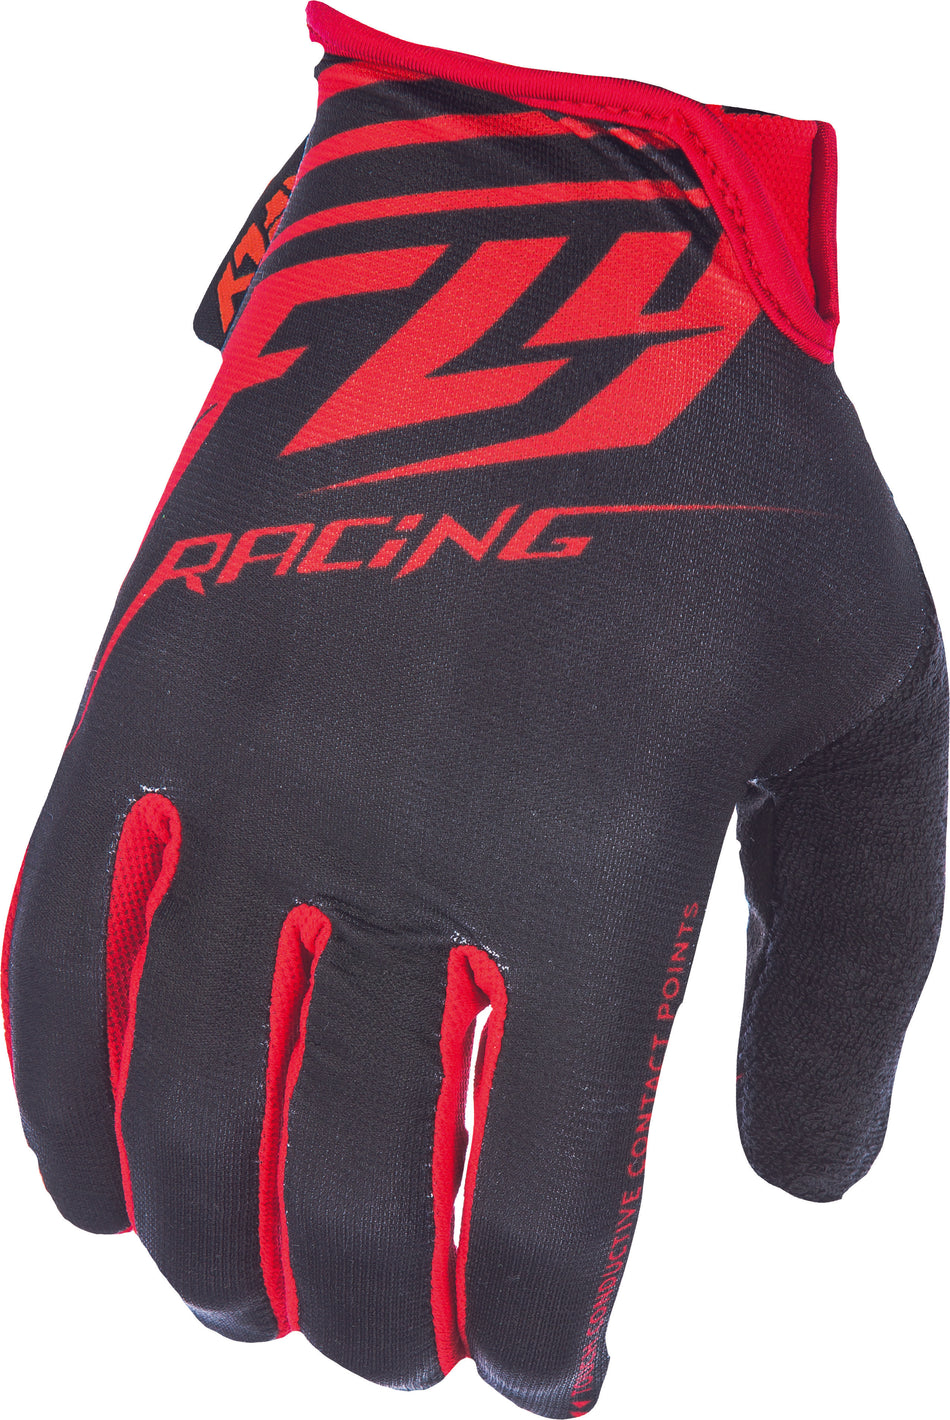 FLY RACING Media Gloves Black/Red Sz 8 350-07208